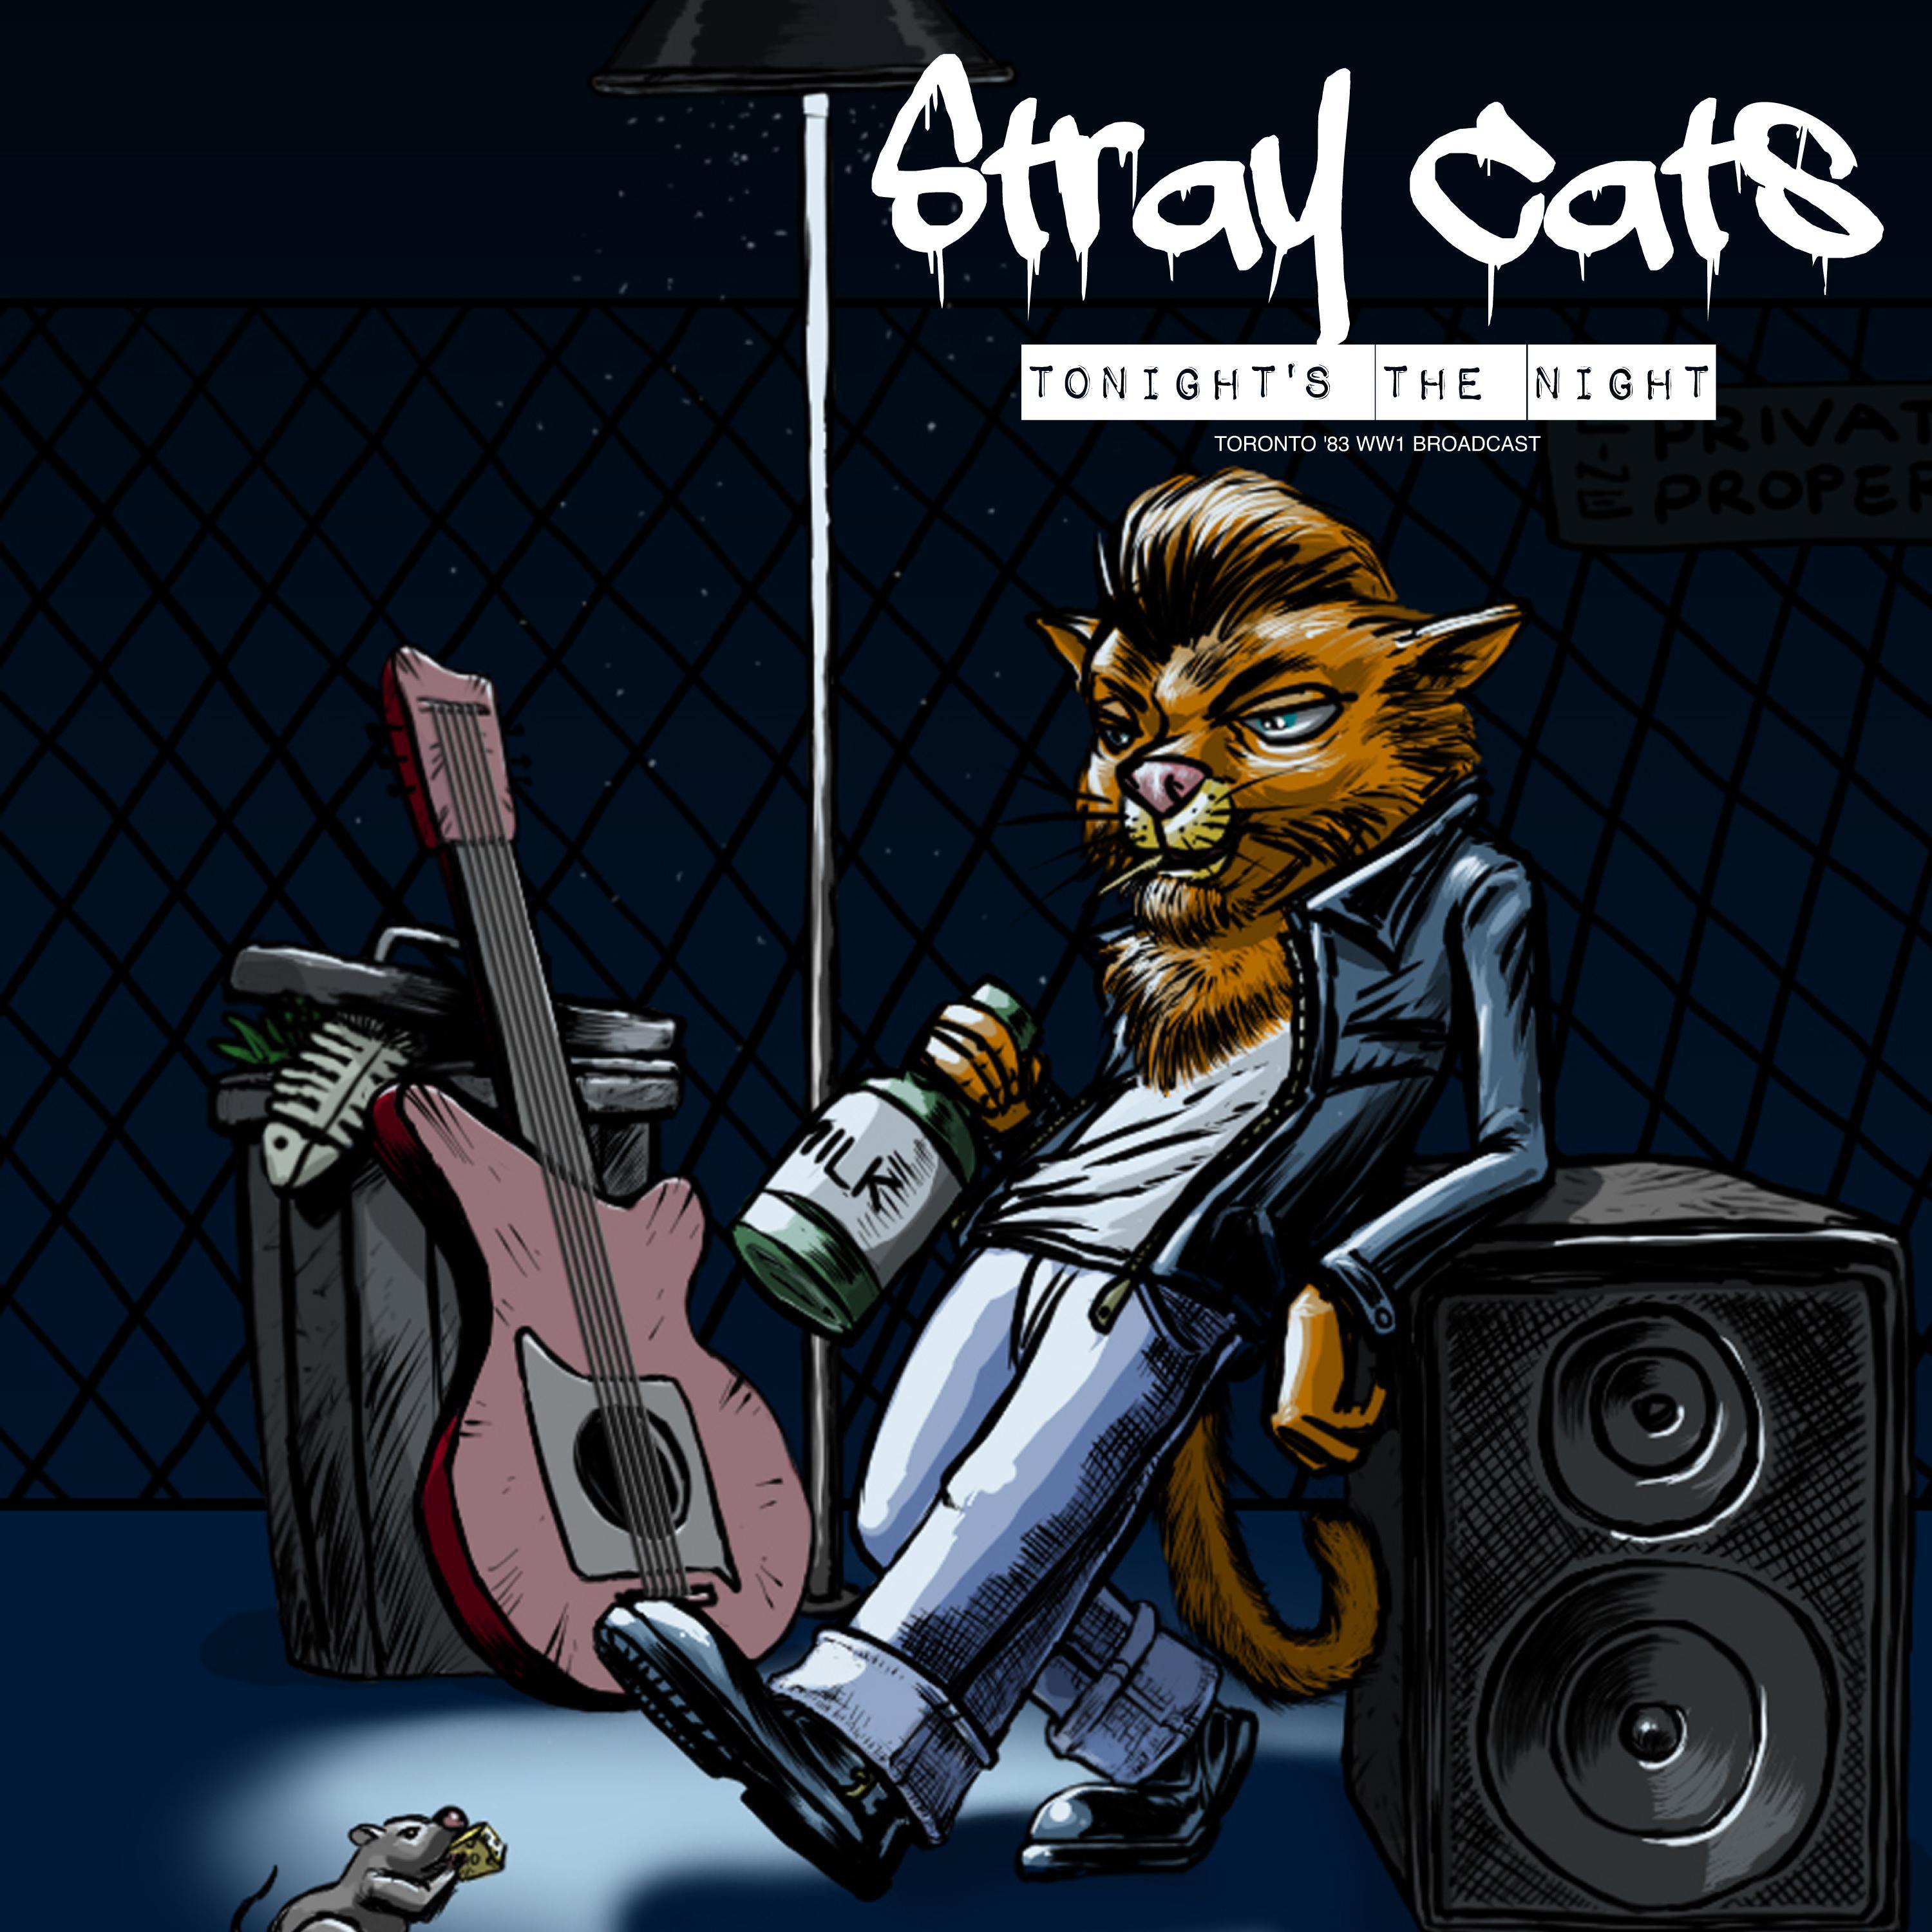 Stray Cats - Baby Blue Eyes (Live 1983)